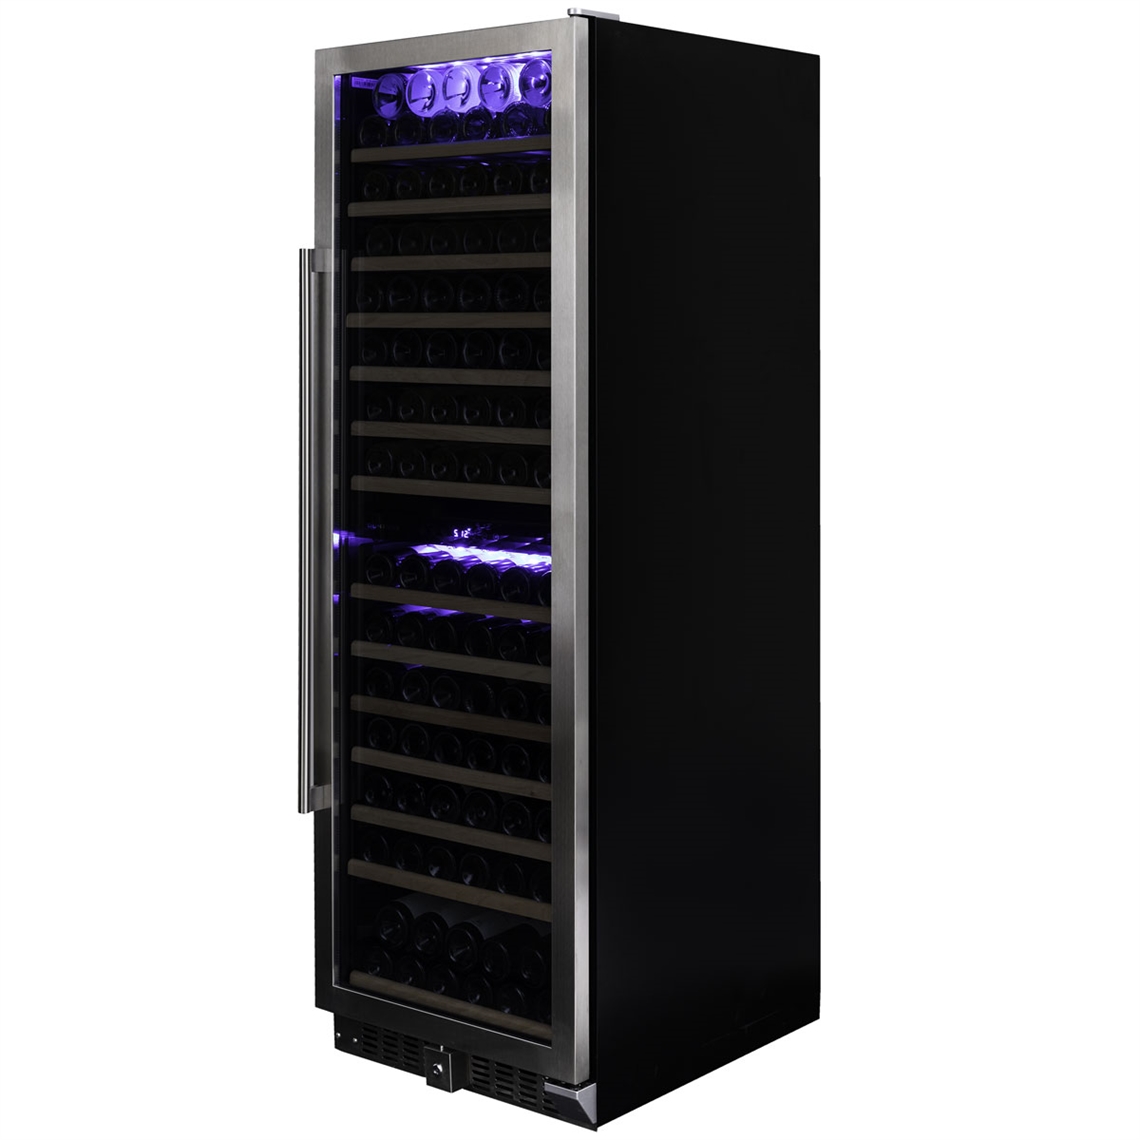 Dunavox Wine Cabinet Grande - 2-Temperature Freestanding - Stainless Steel DX-166.428SDSK